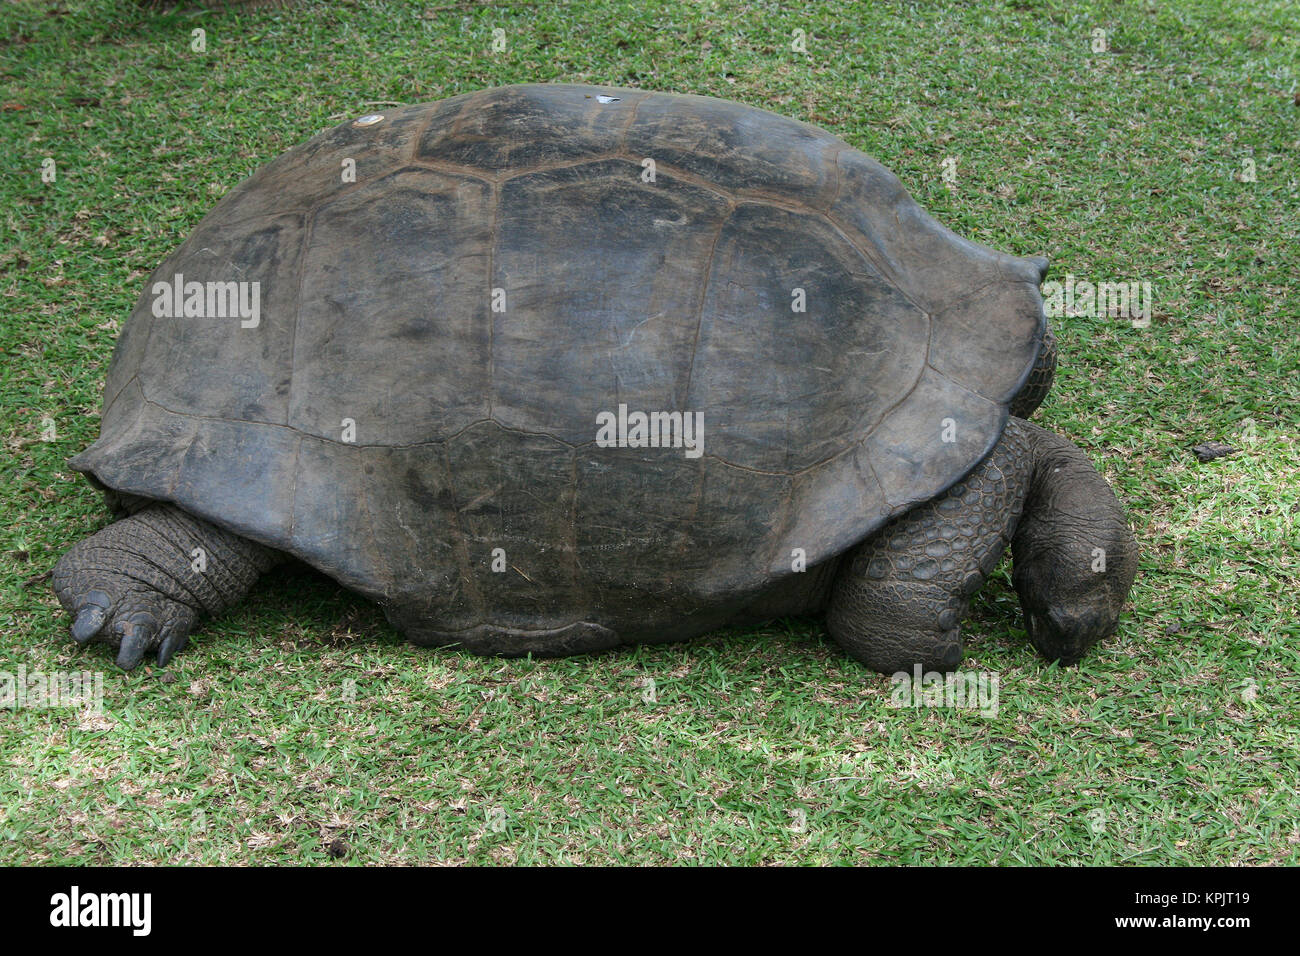 Tartaruga gigante di Aldabra (Aldabrachelys gigantea), Isola Curieuse, Seychelles. Foto Stock